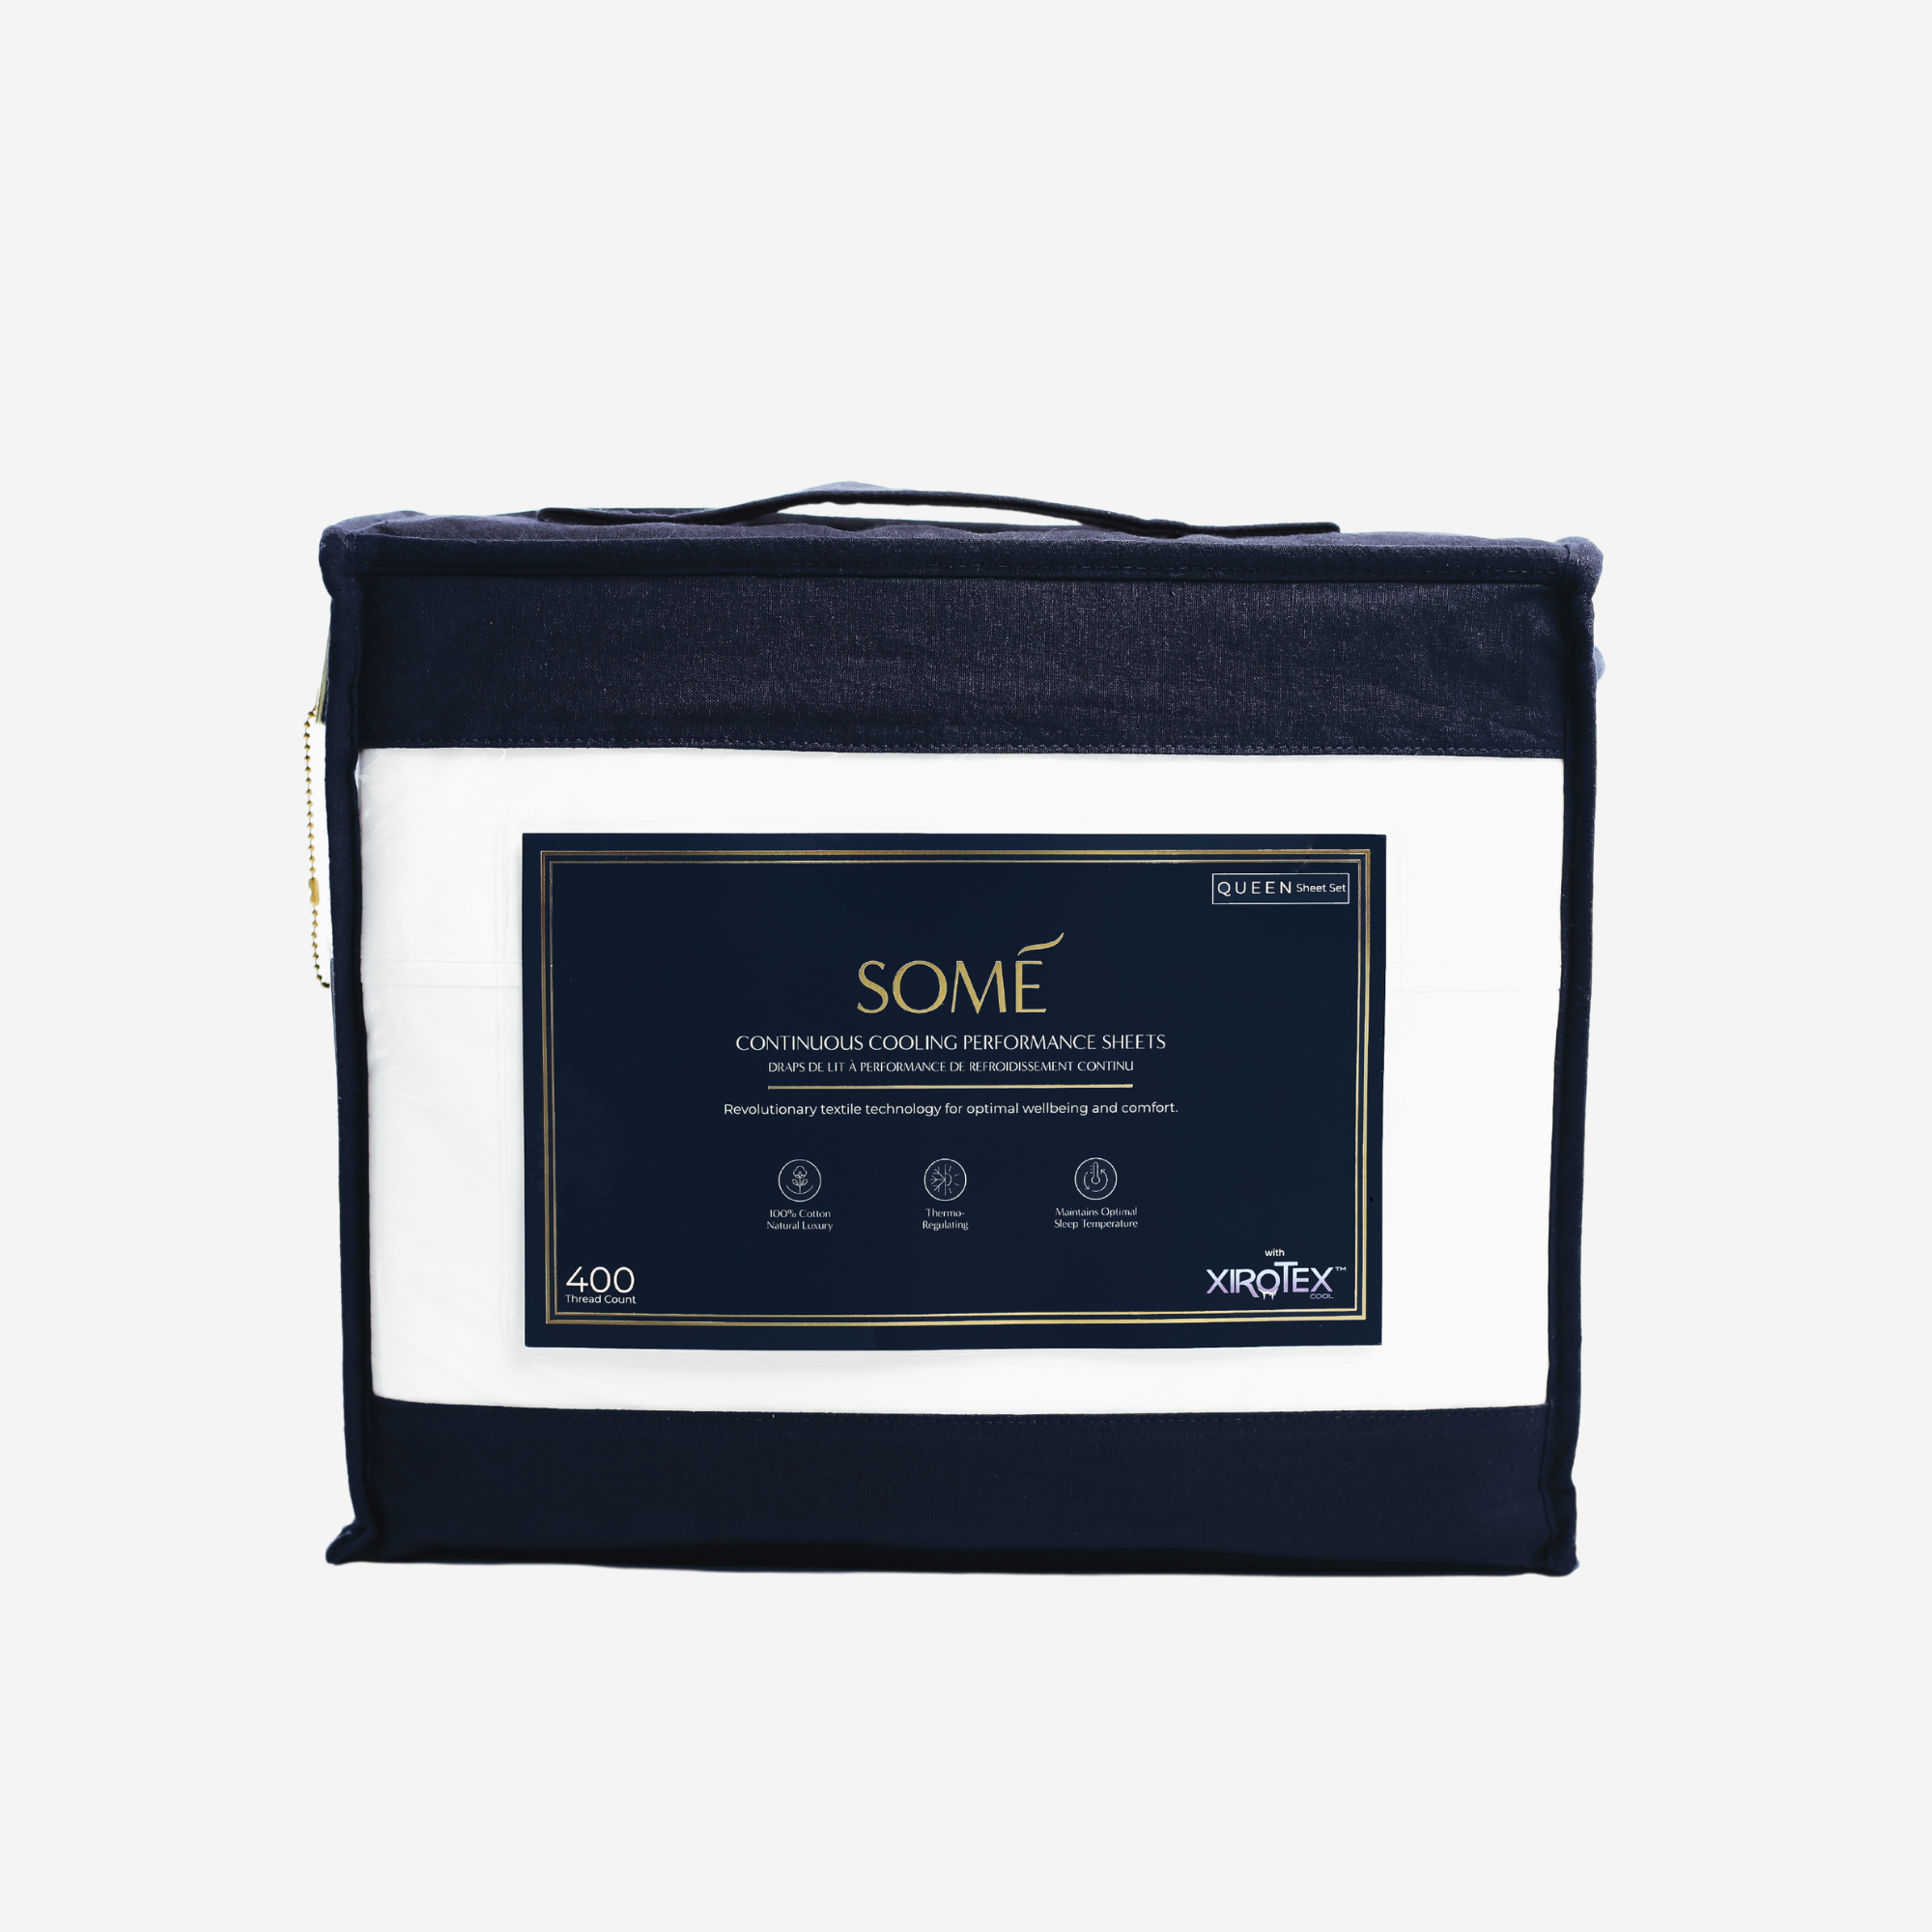 SOMÉ Continuous Cooling Performance Sheets - Lusomé Sleepwear USA